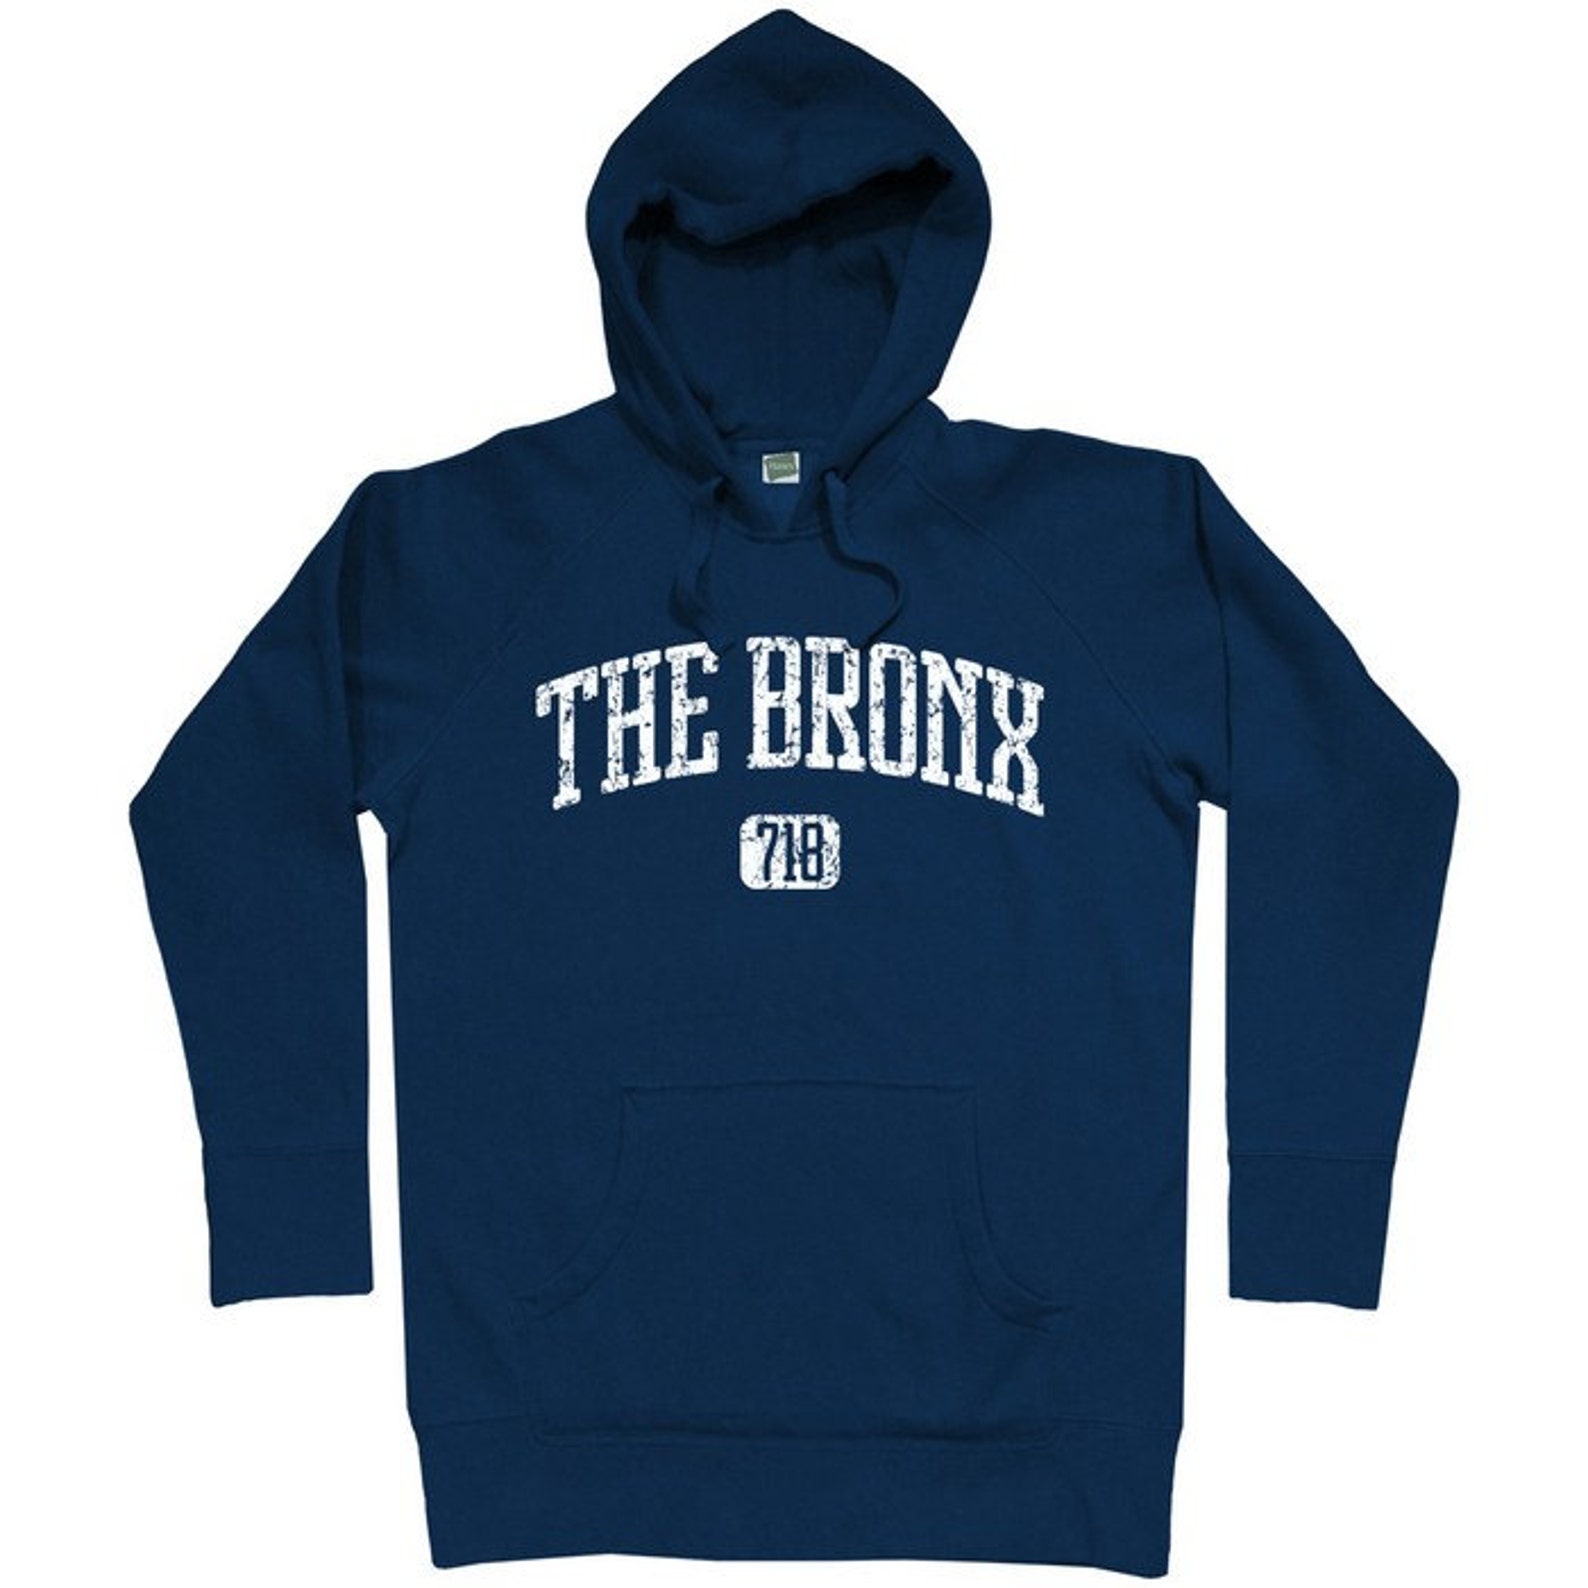 Bronx 718 Hoodie Men S M L XL 2x Bronx Hoody Sweatshirt - Etsy